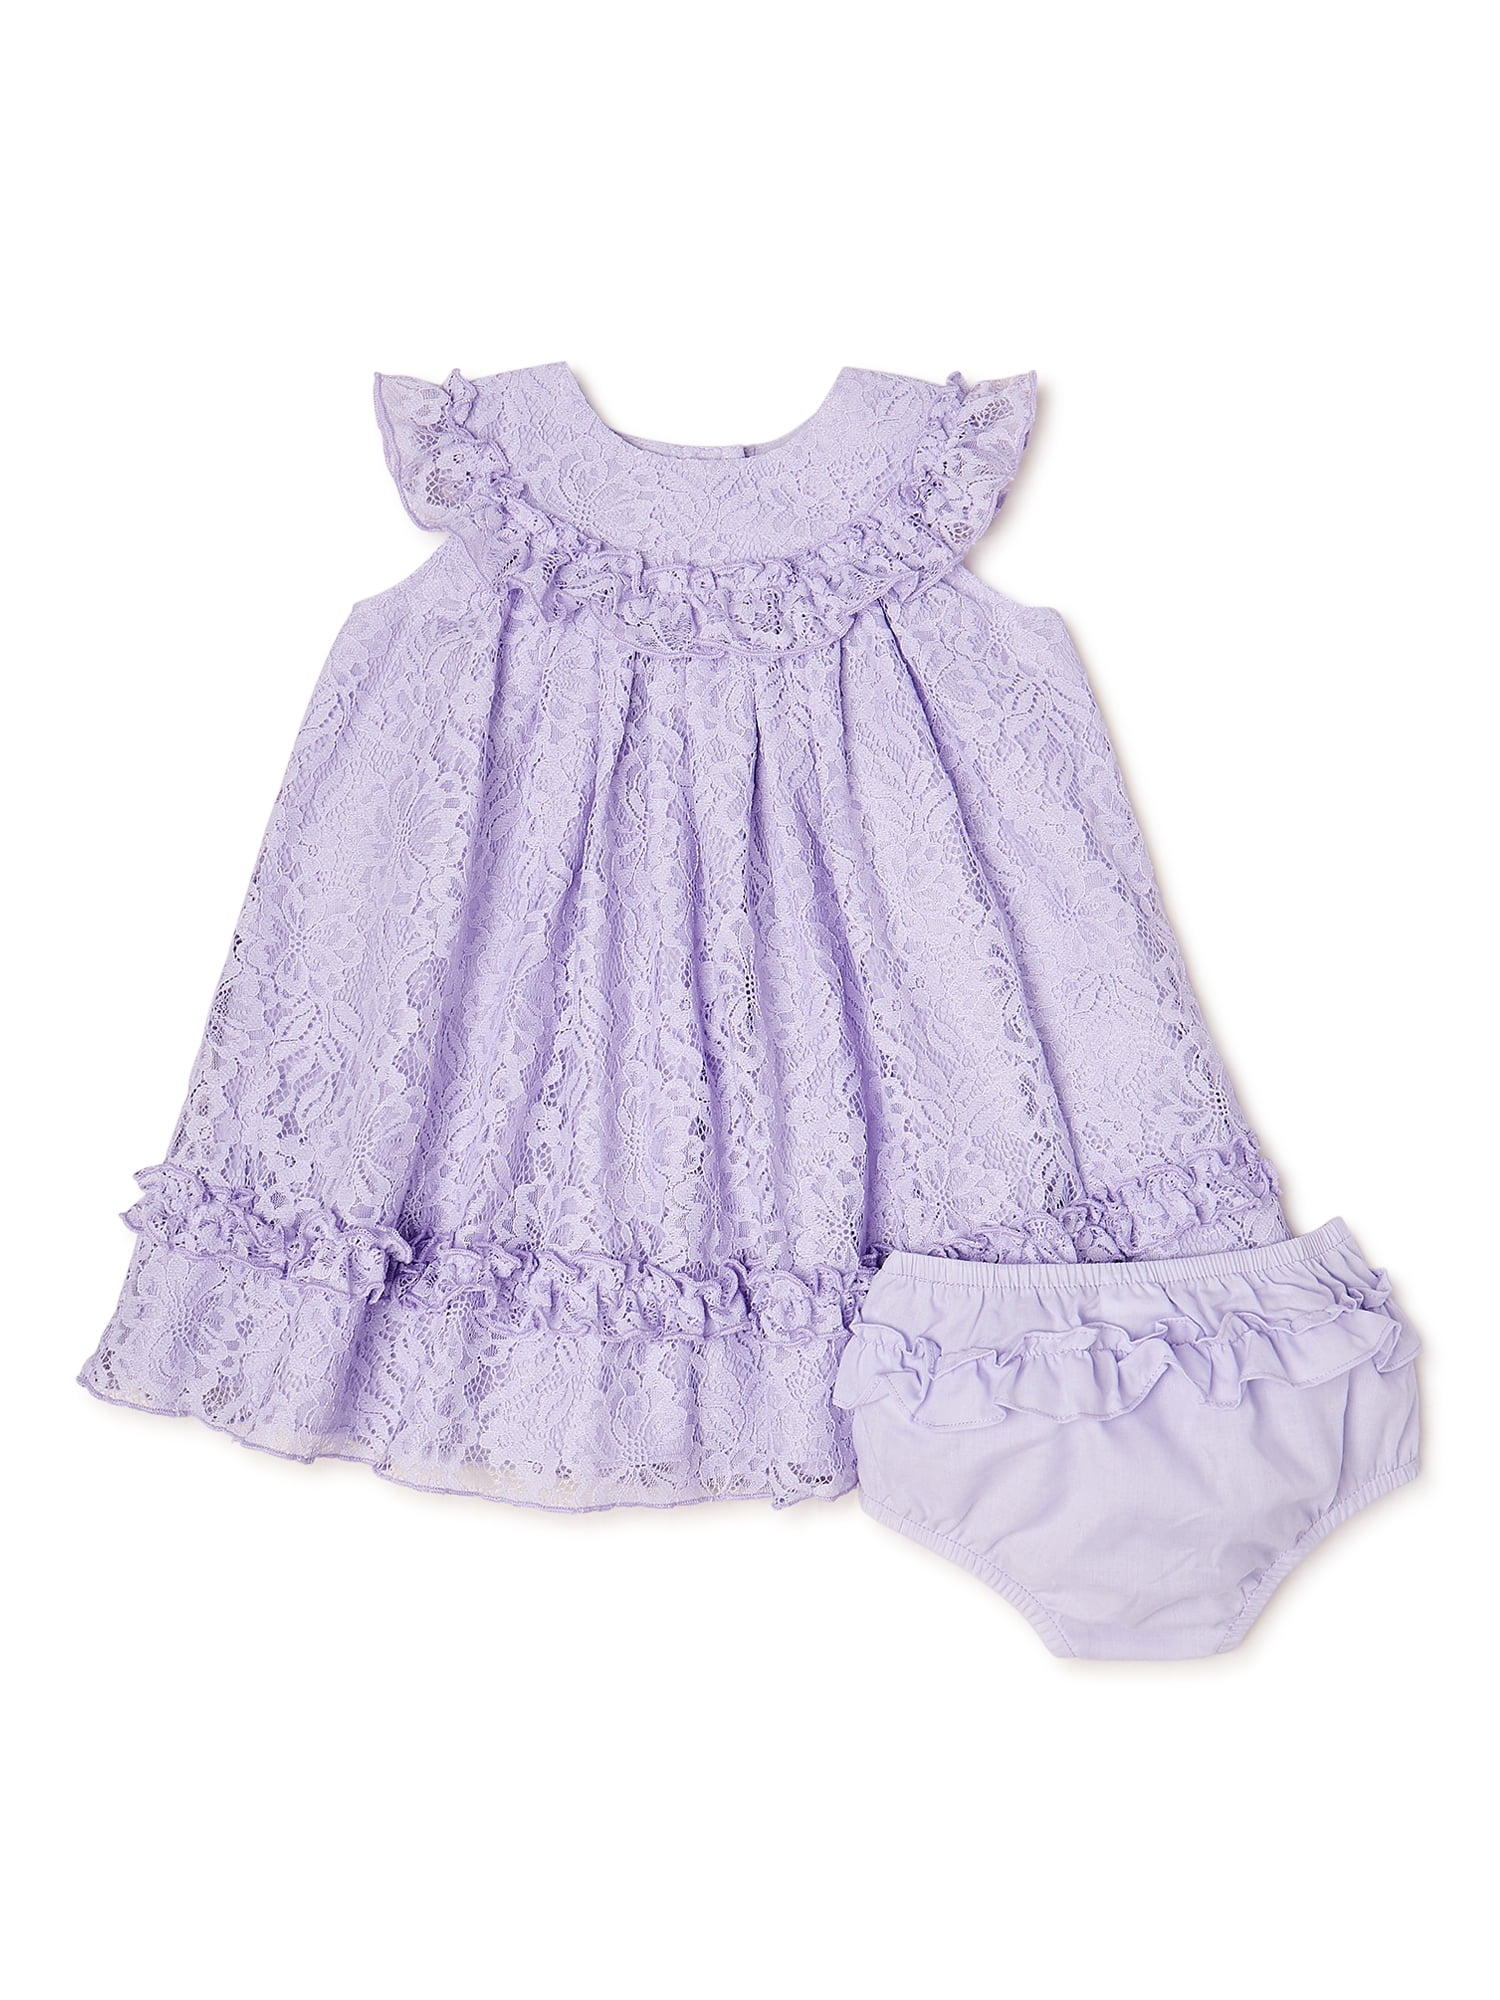 NEW NWT Childrens Place girls 10/12 beautiful blue purple lace dress